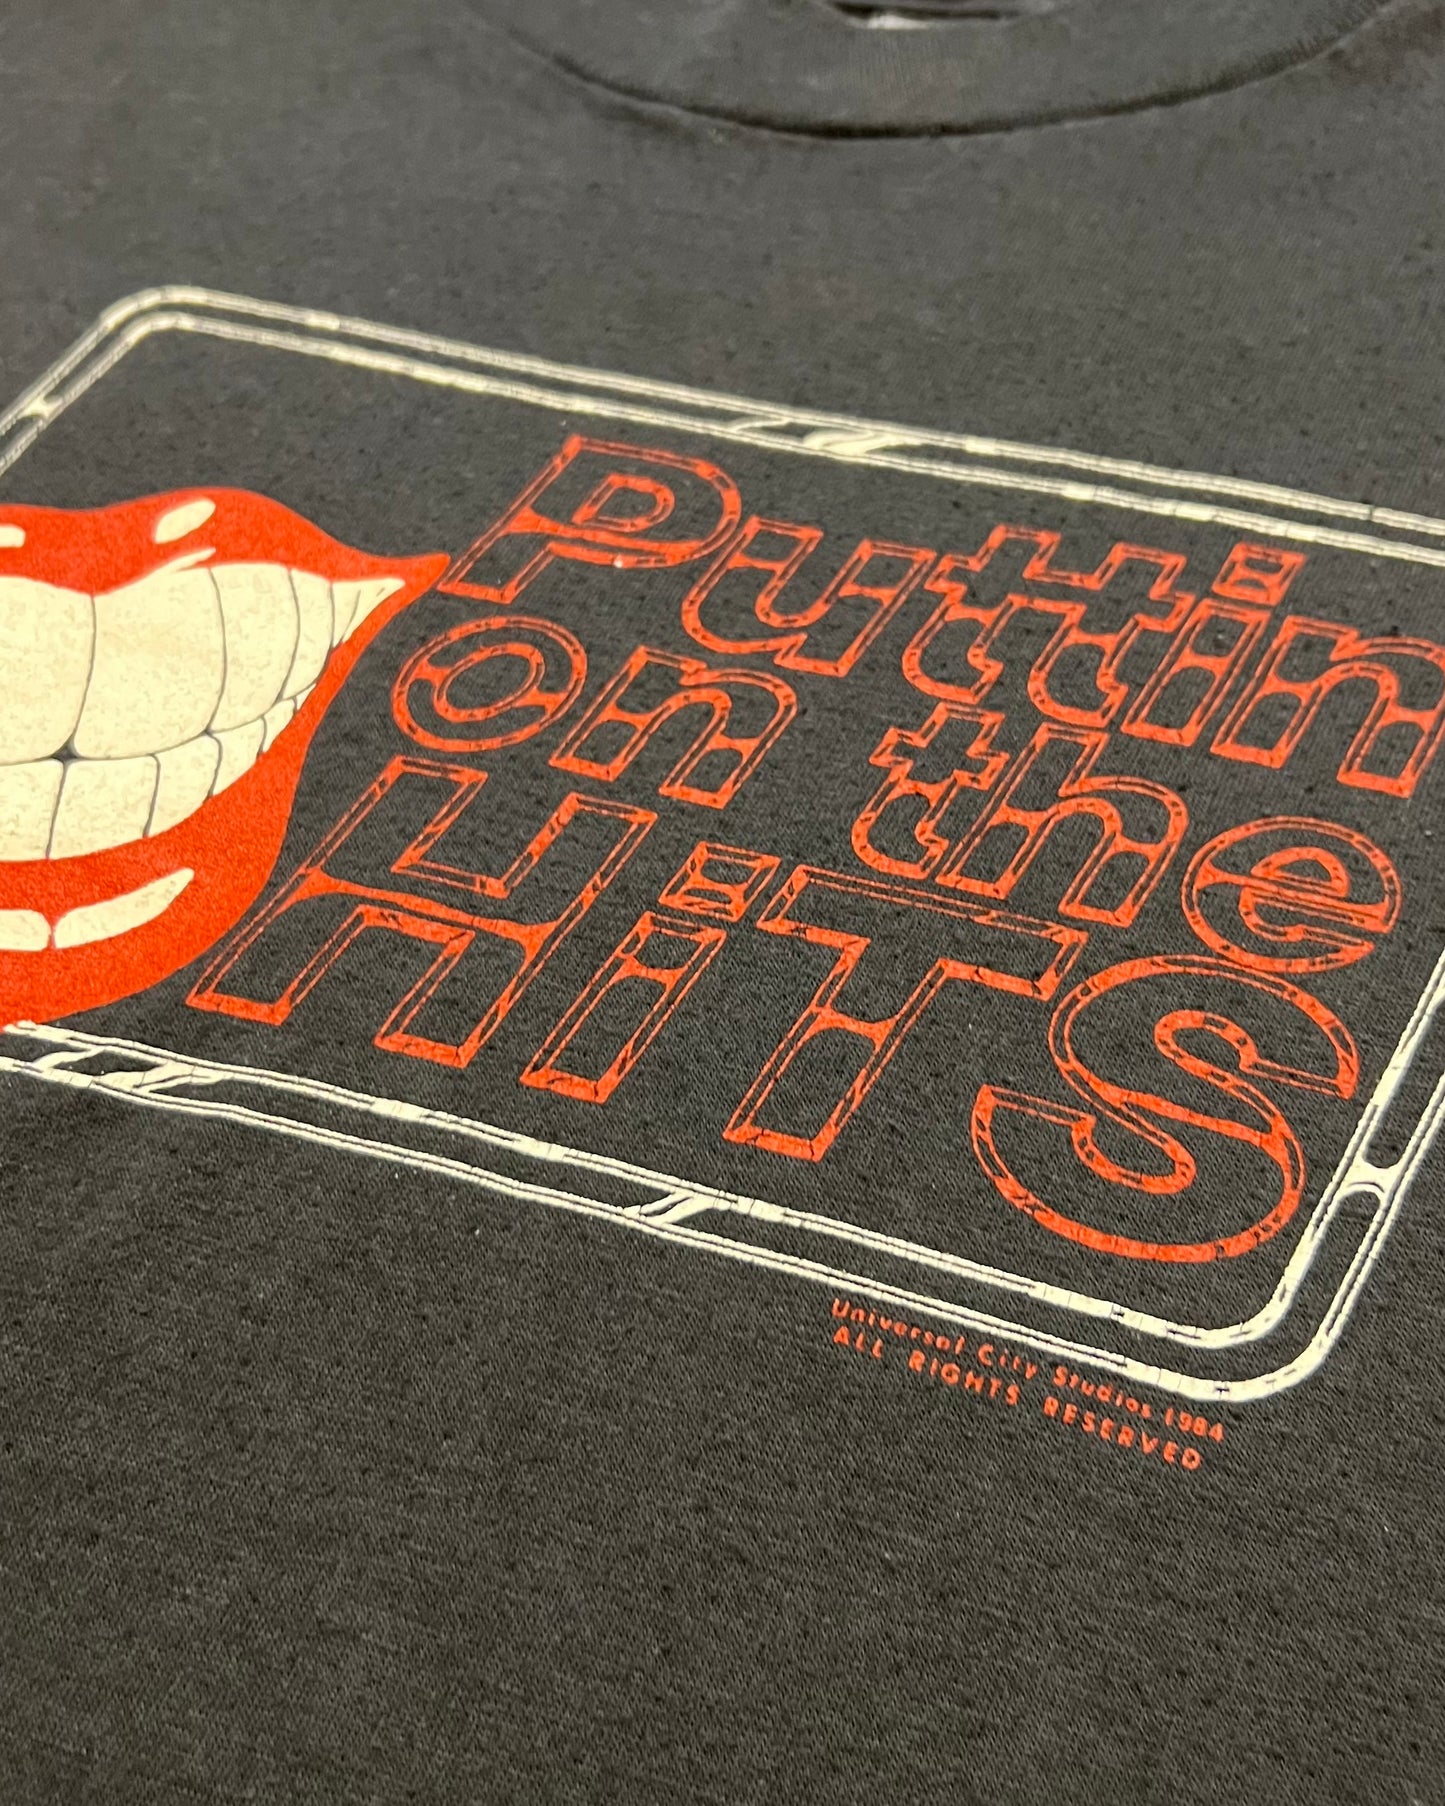 1984 Universal Studios "Puttin' on the Hits" Single Stitch T-Shirt